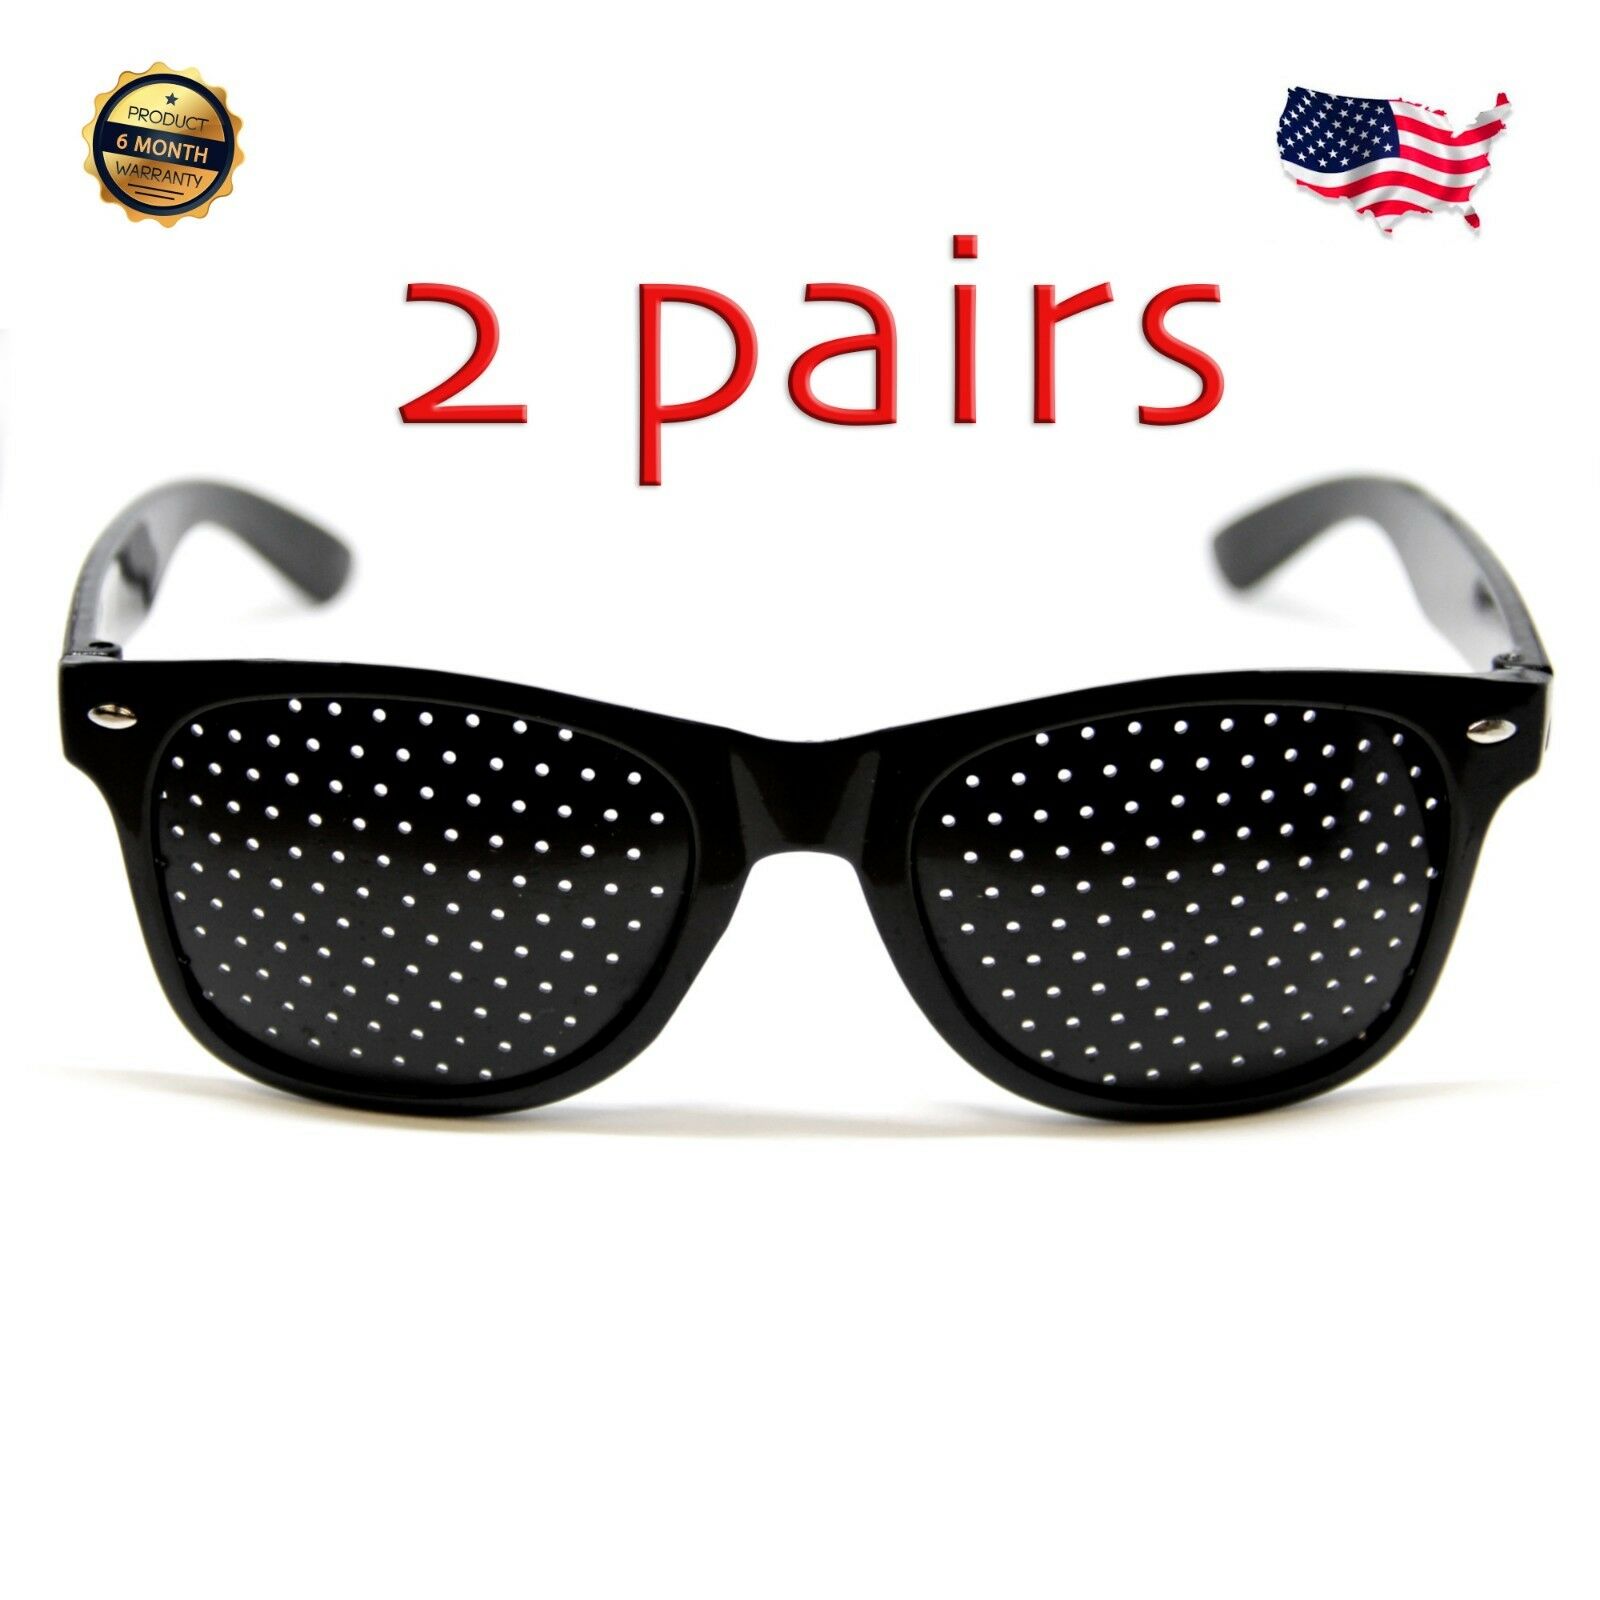 2 Pairs Of Pinhole Glasses Vision Correction, Small Holes, Eye Exercise